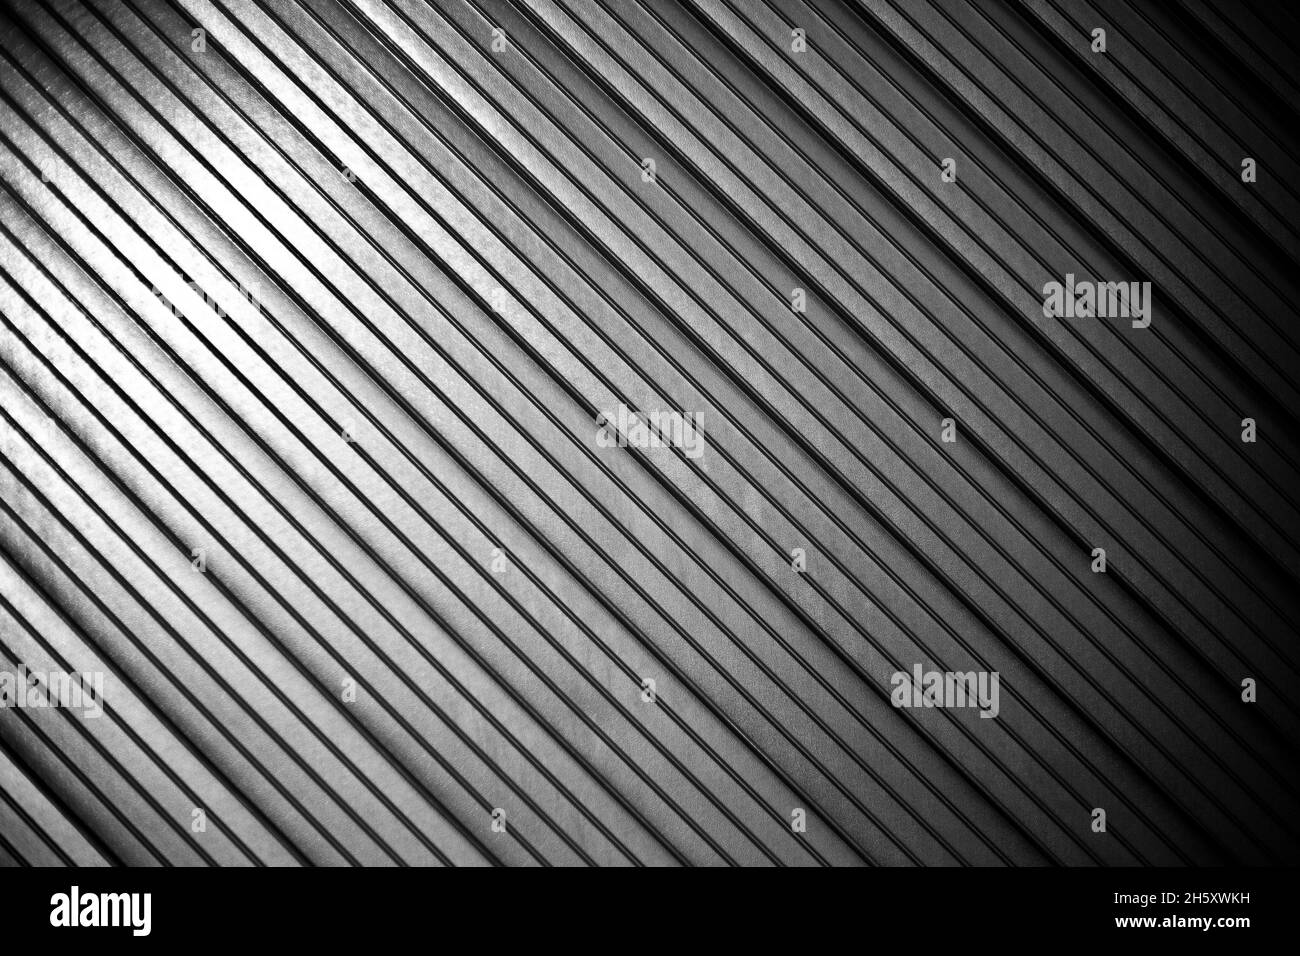 metallic corrugate surface Stock Photo